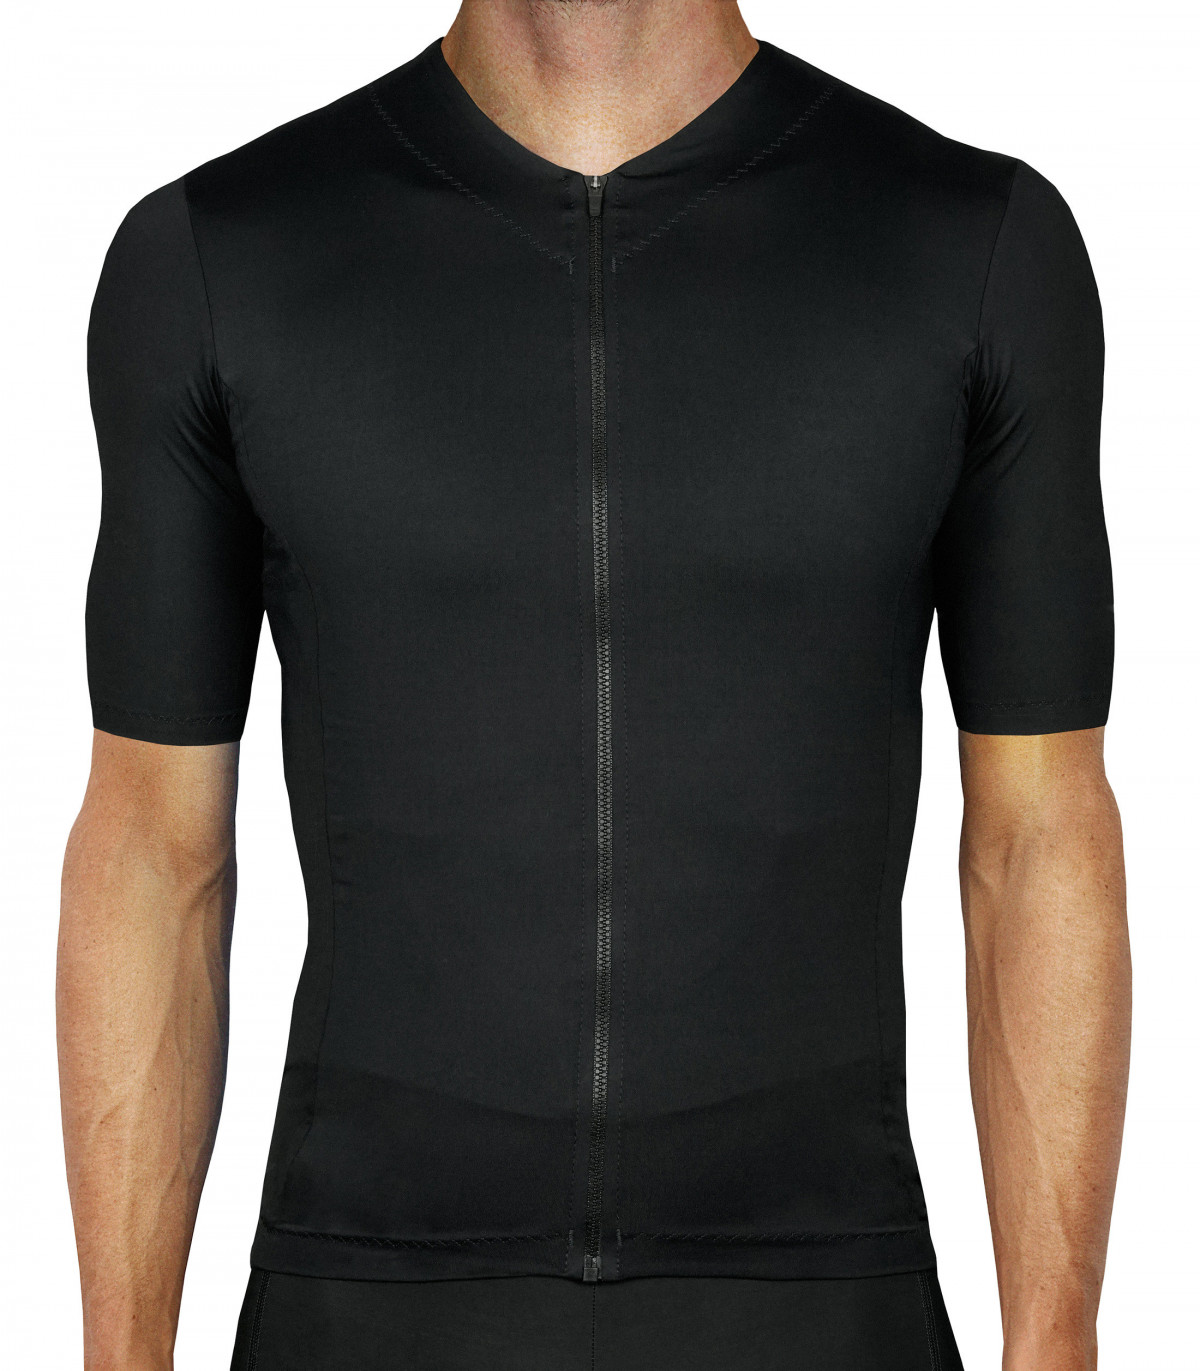 Secret Black Cycling Jersey. No logo, Unbranded design. Without prints